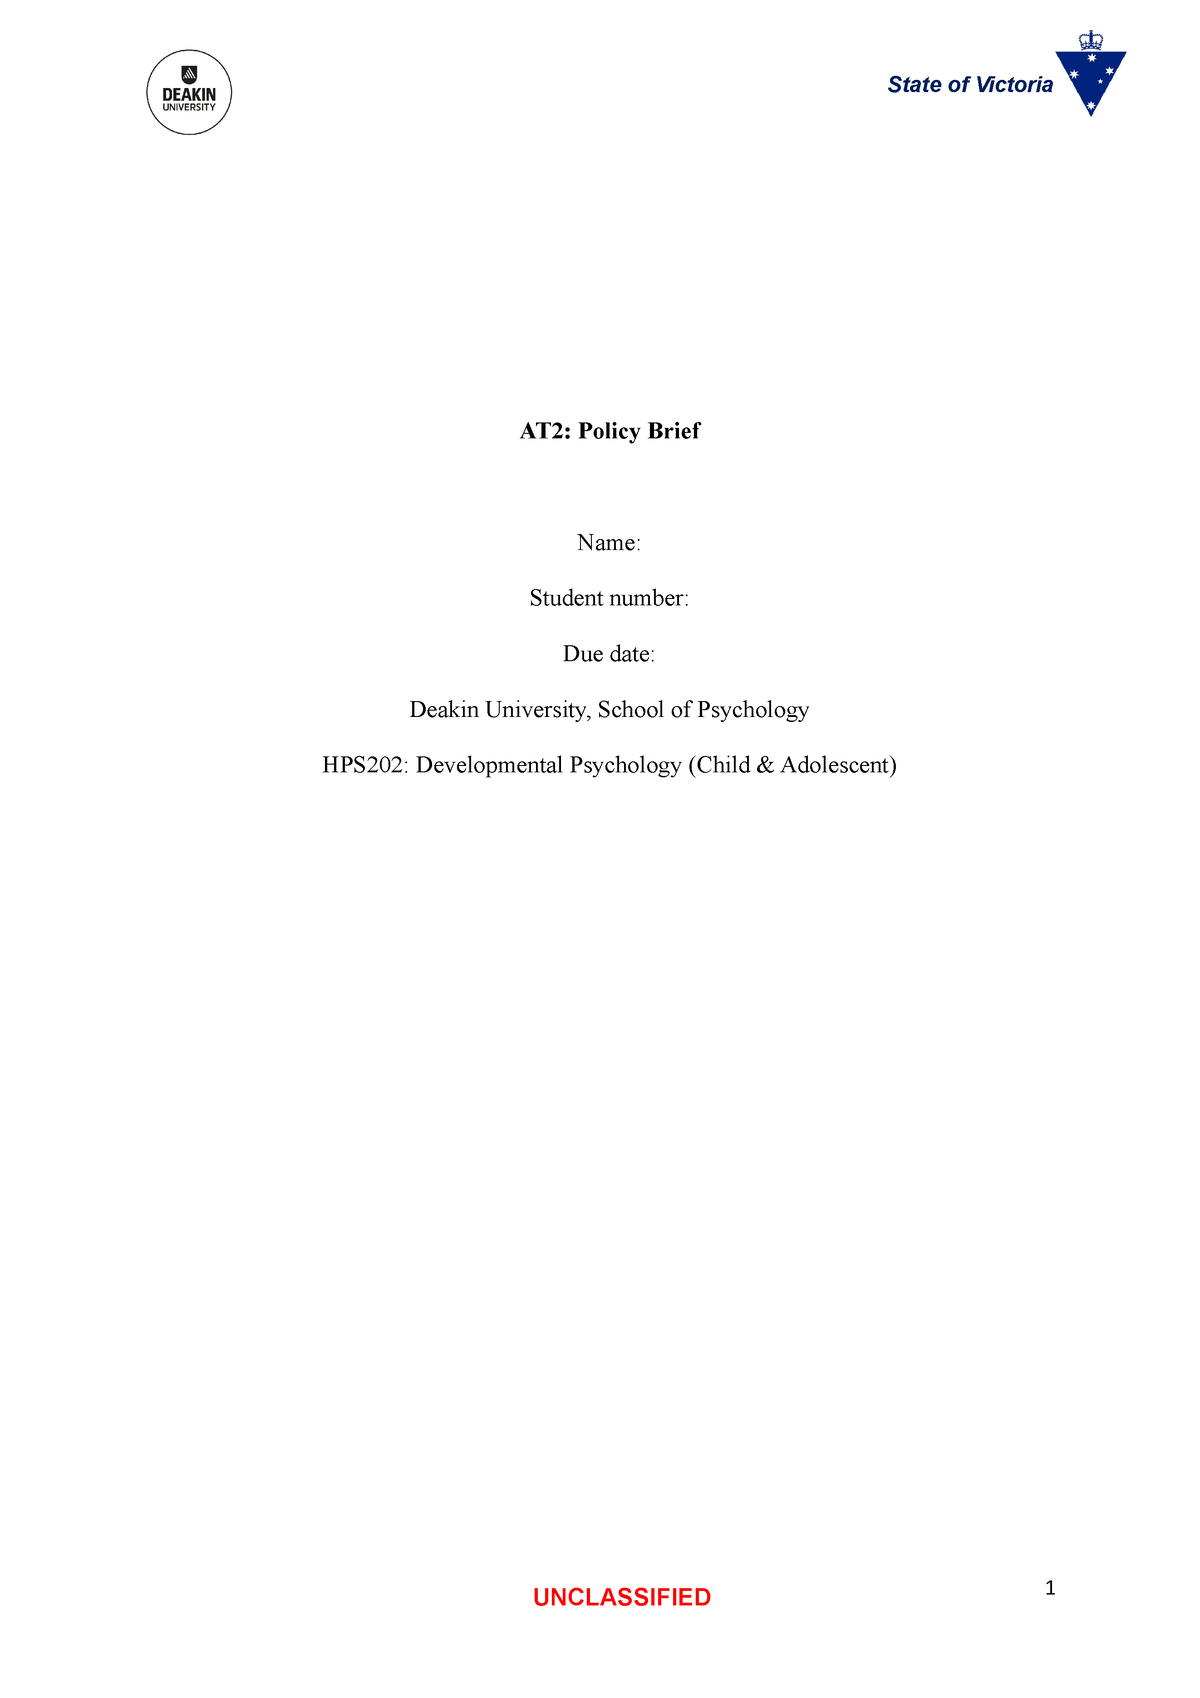 deakin phd thesis template